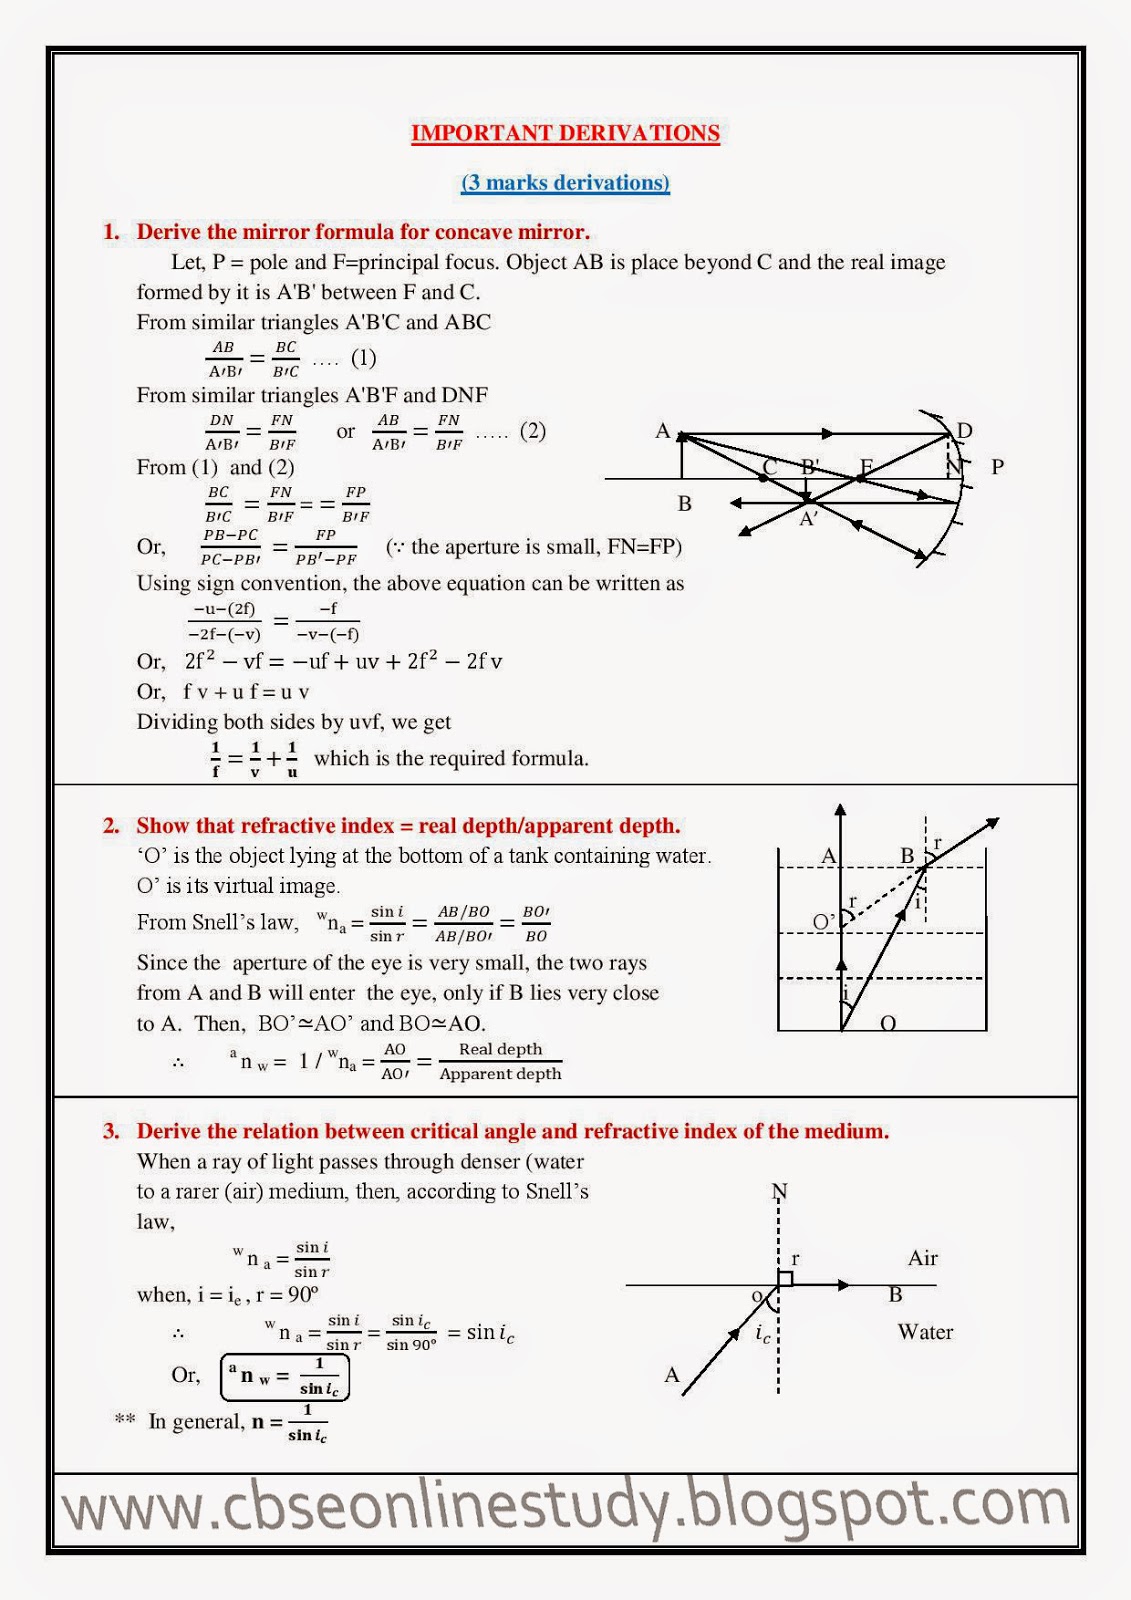 derivations in physics class 11 cbse pdf 191